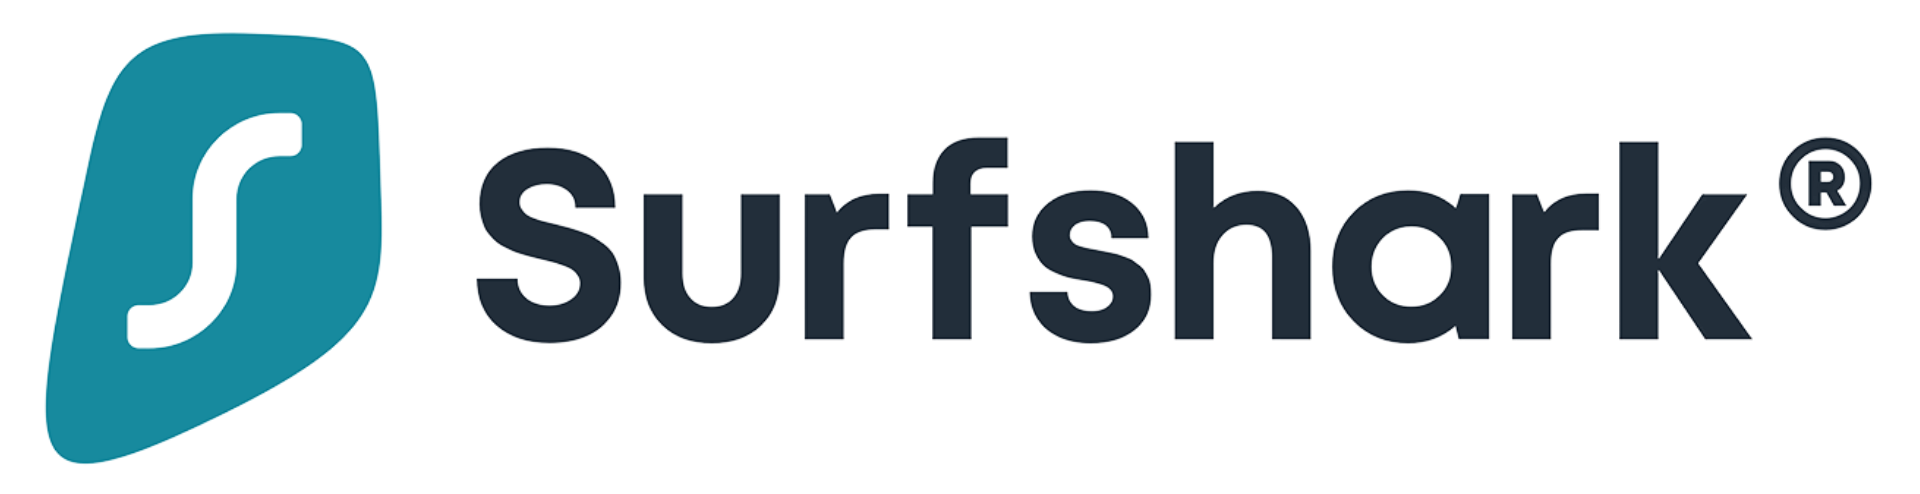 Hulu in the Philippines - Surfshark logo